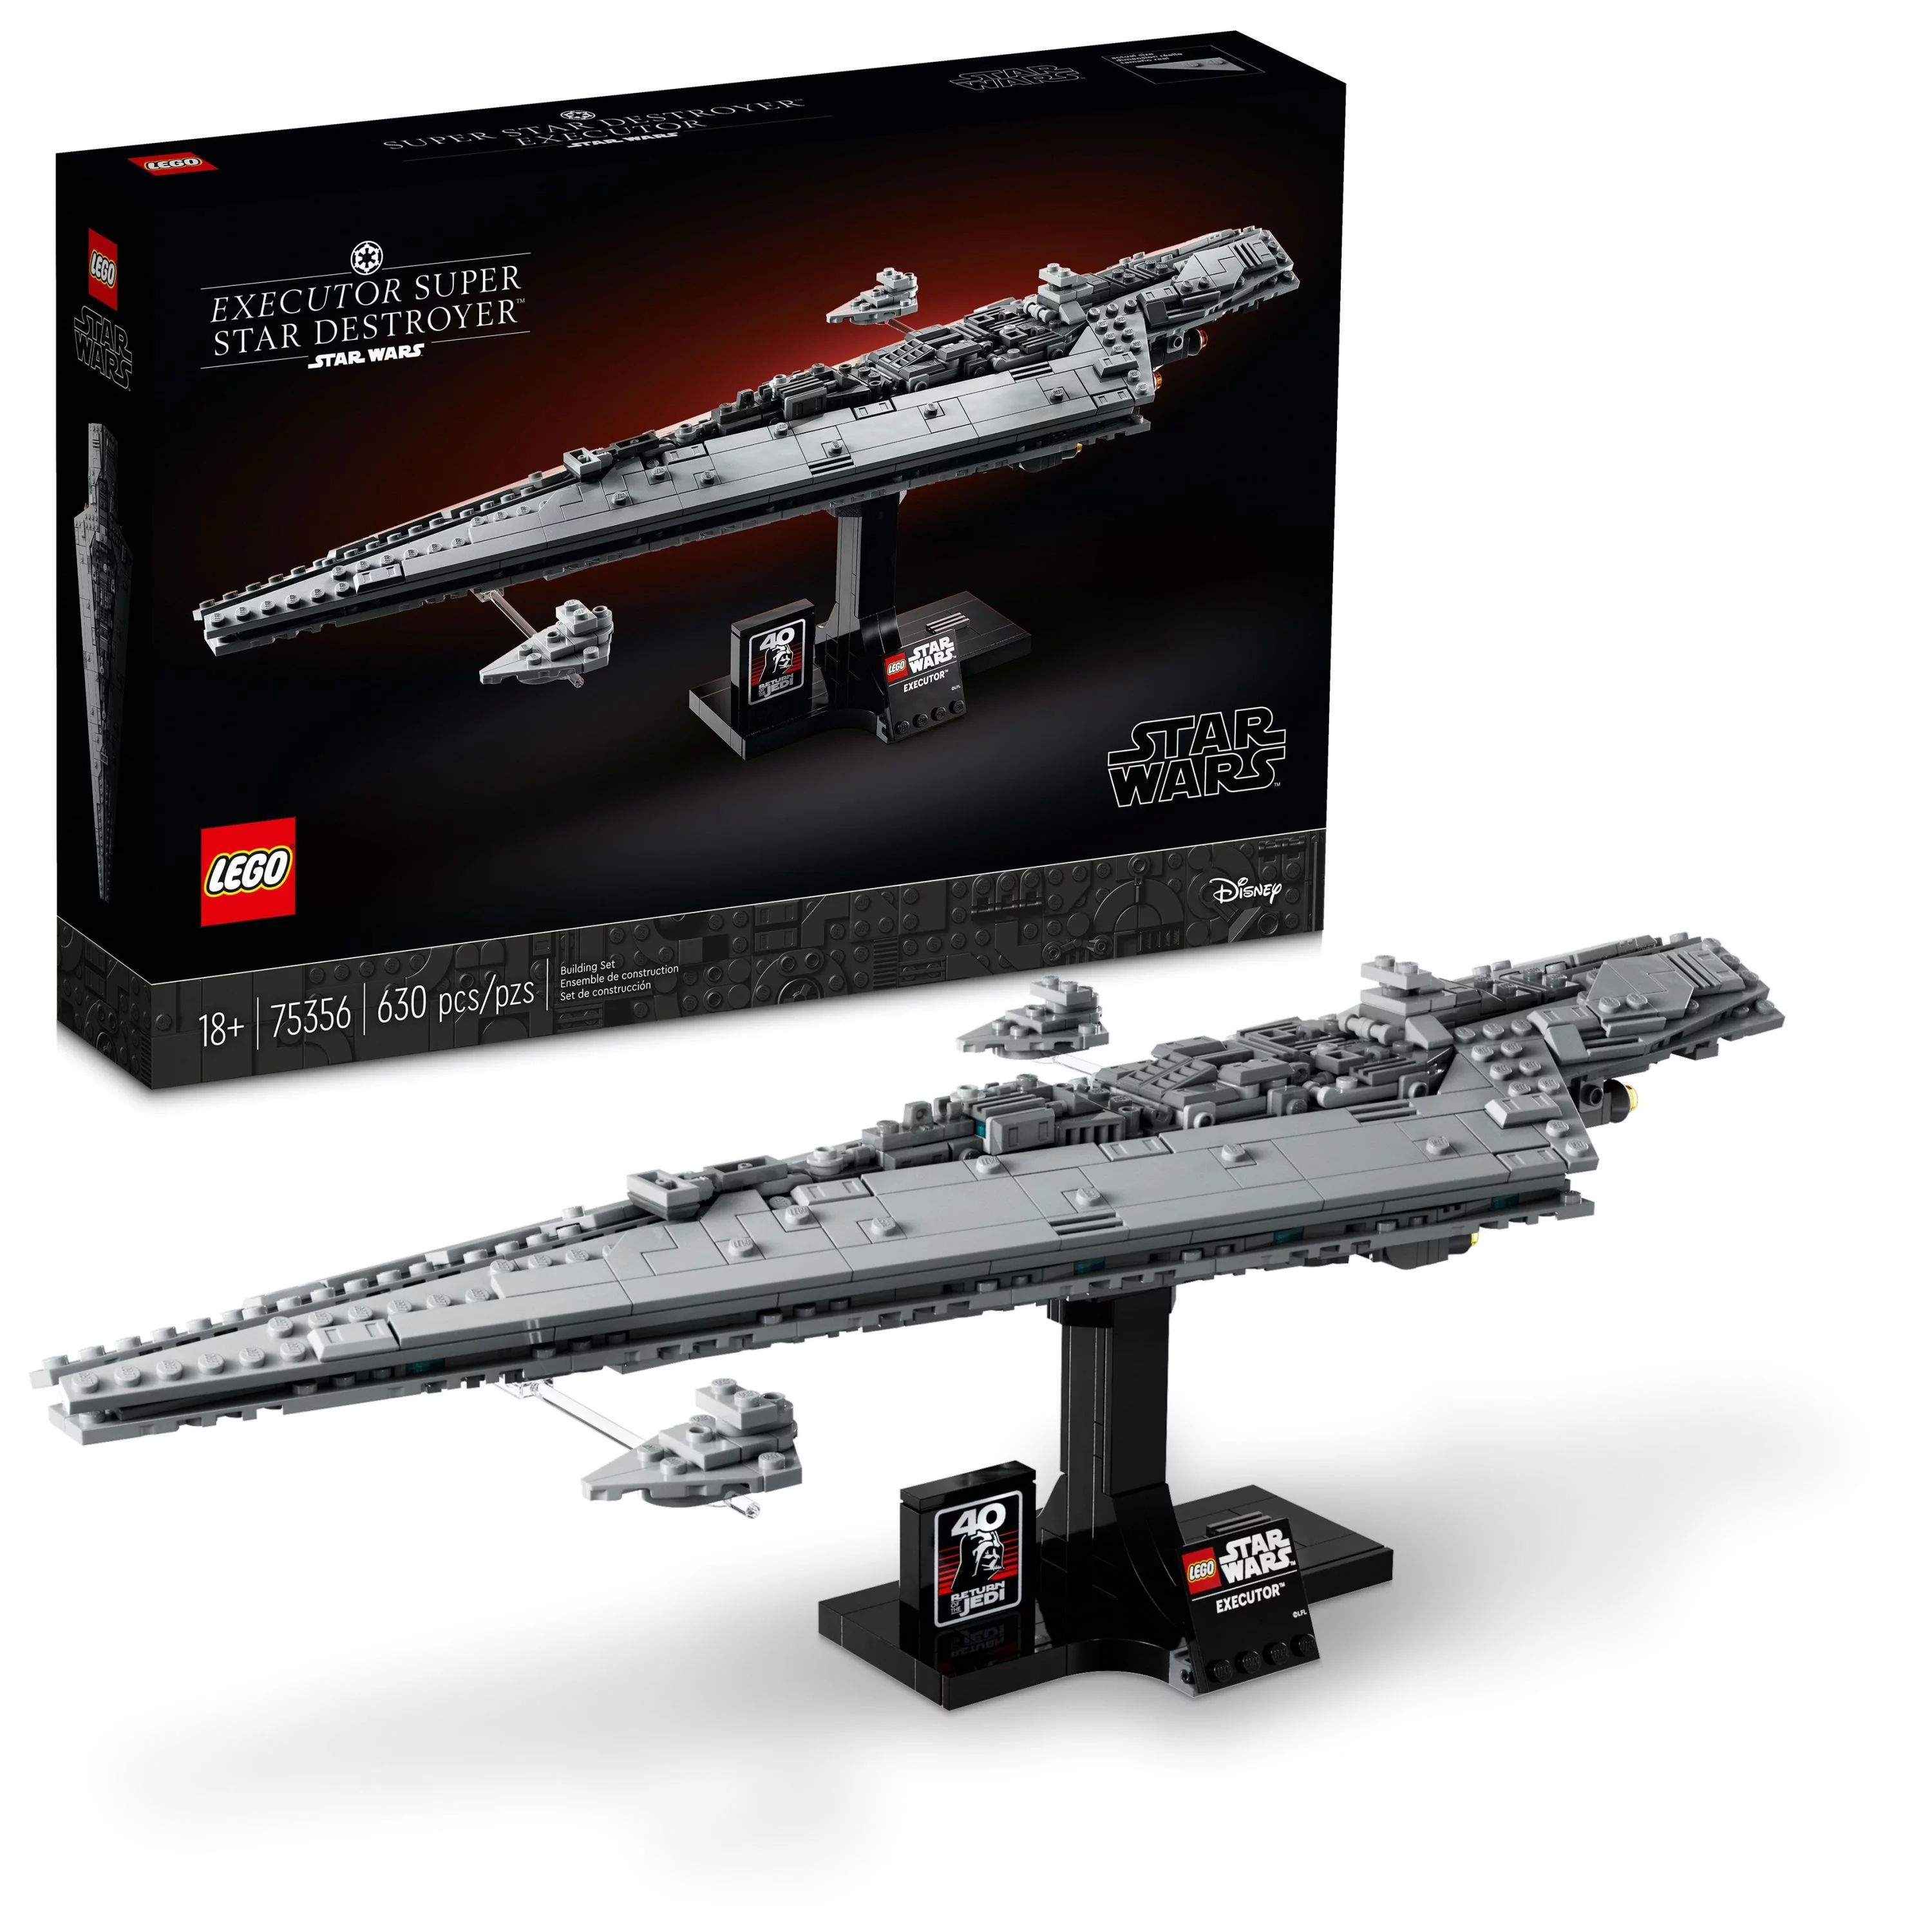 LEGO Star Wars Executor Super Star Destroyer 75356 Star Wars Gift for Star Wars Fans | Walmart (US)